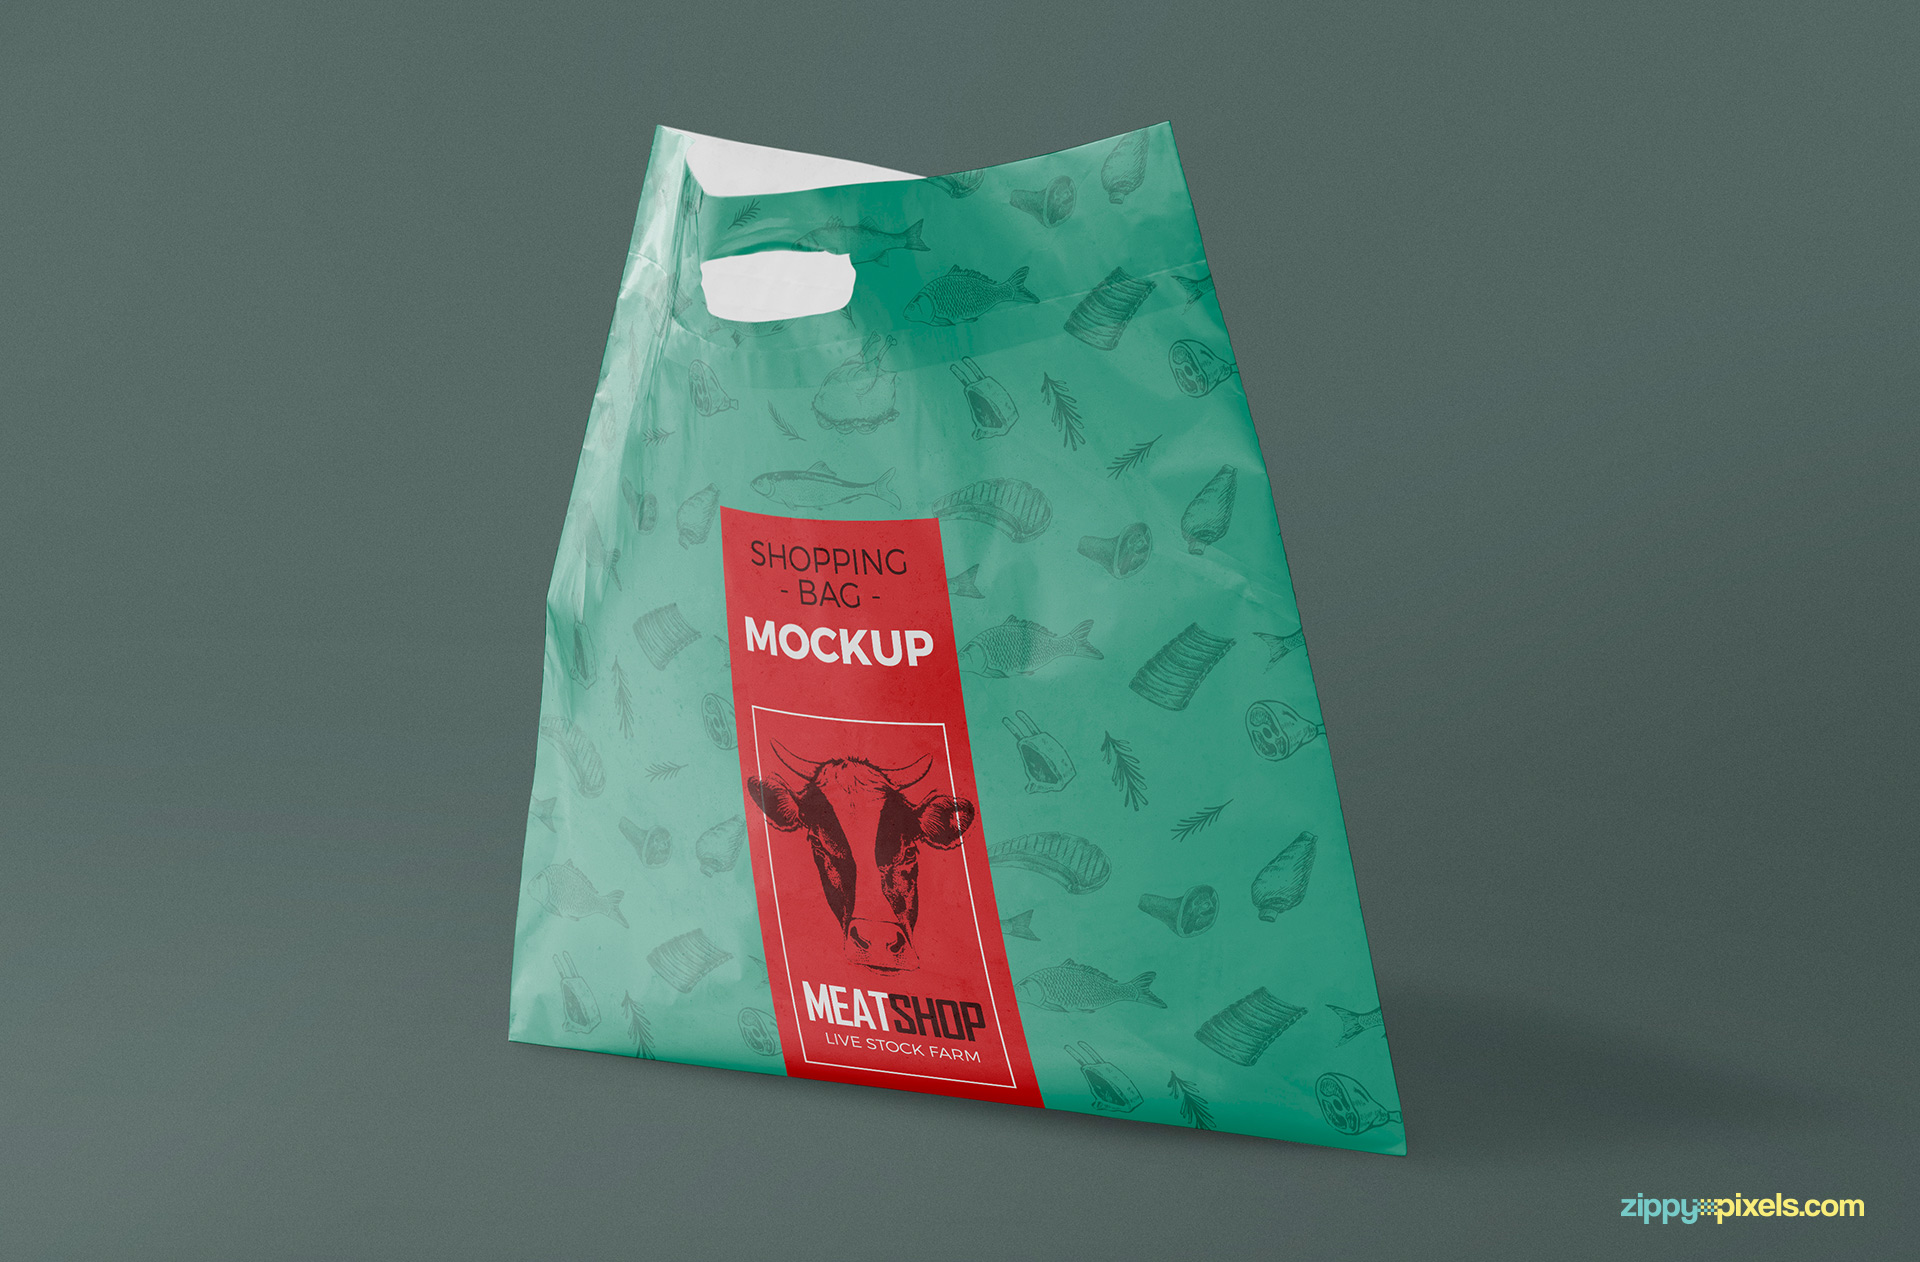 Free Plastic Bag Mockup